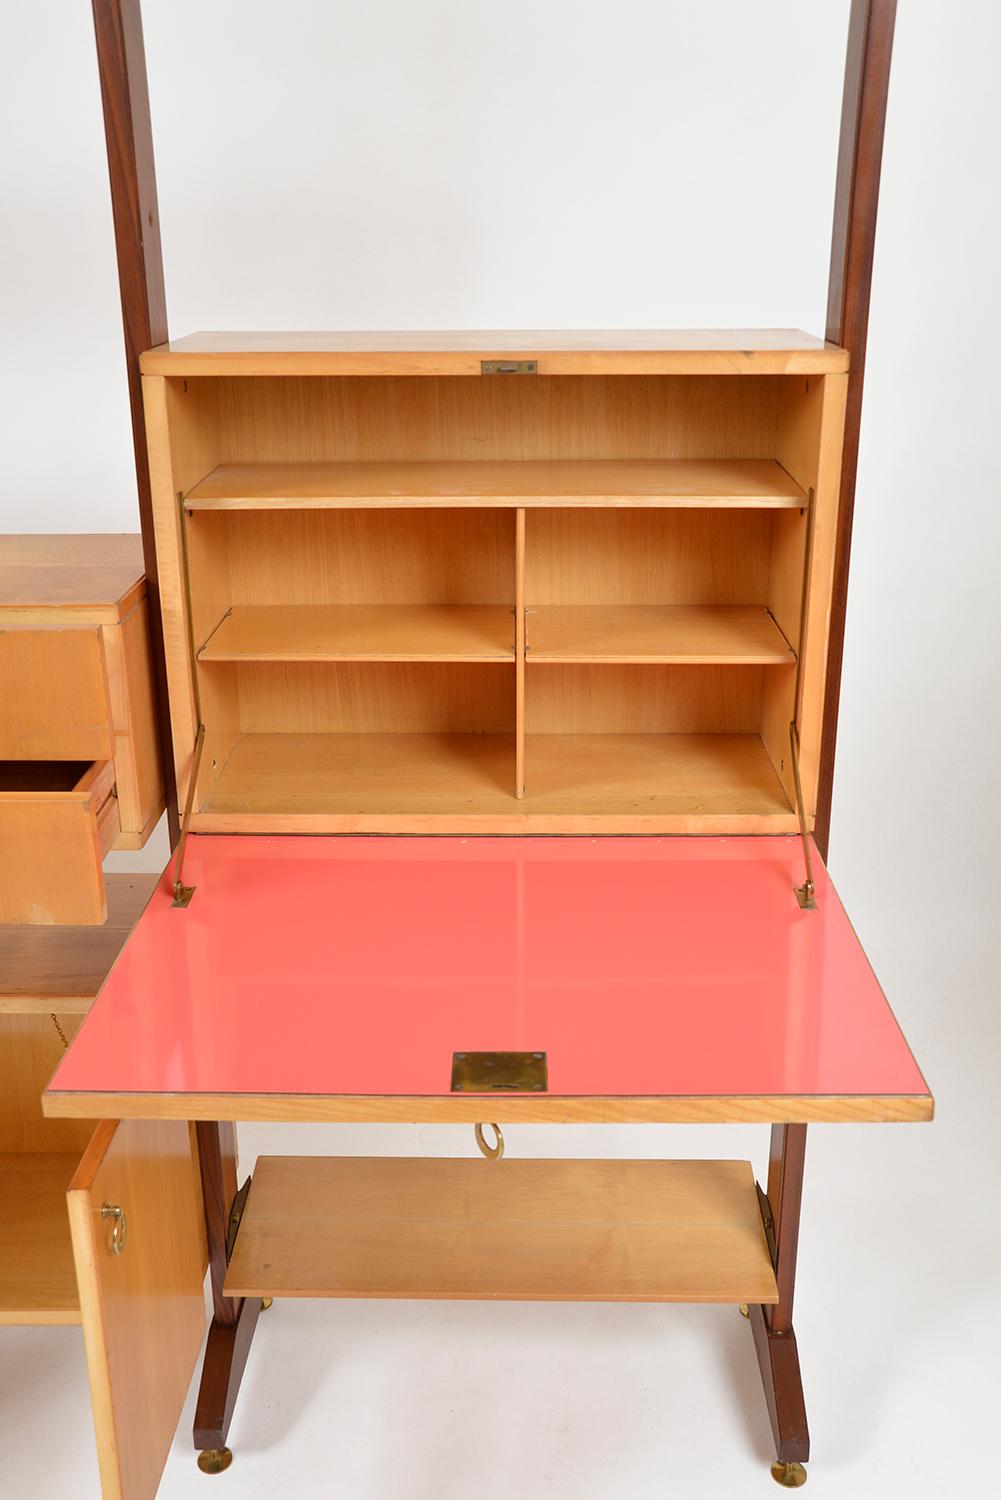 Large 1950s Italian Mid Century Teak Maple Freestanding Shelving System 18 Piece For Sale 5